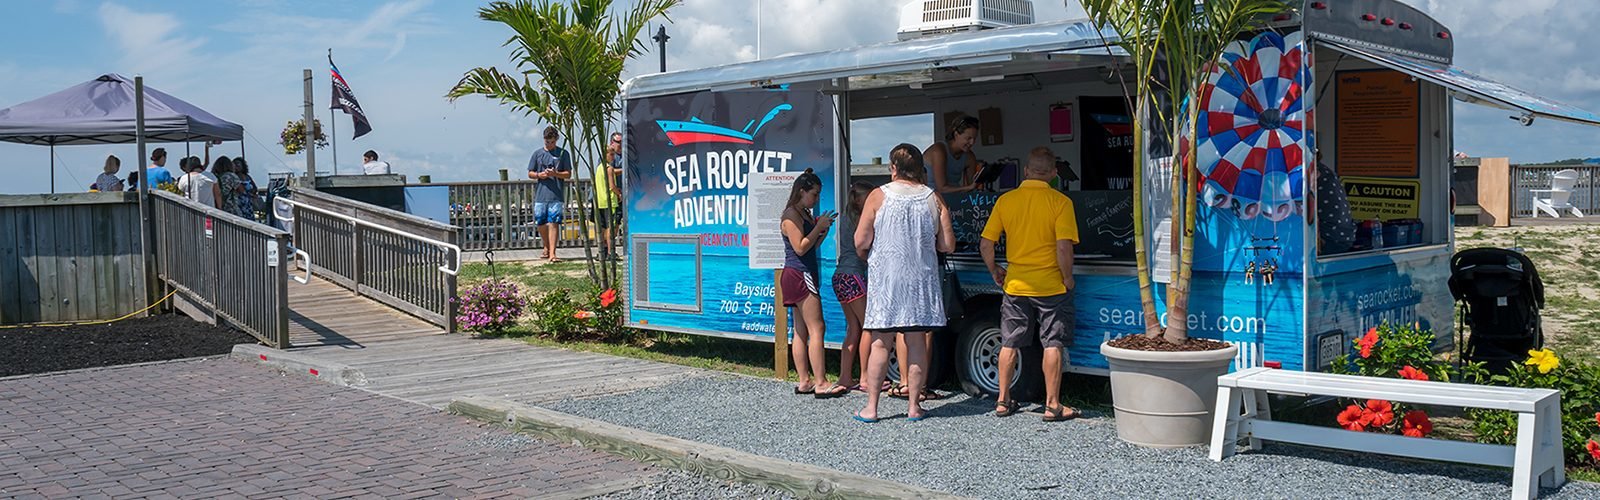 Sea Rocket Business Front